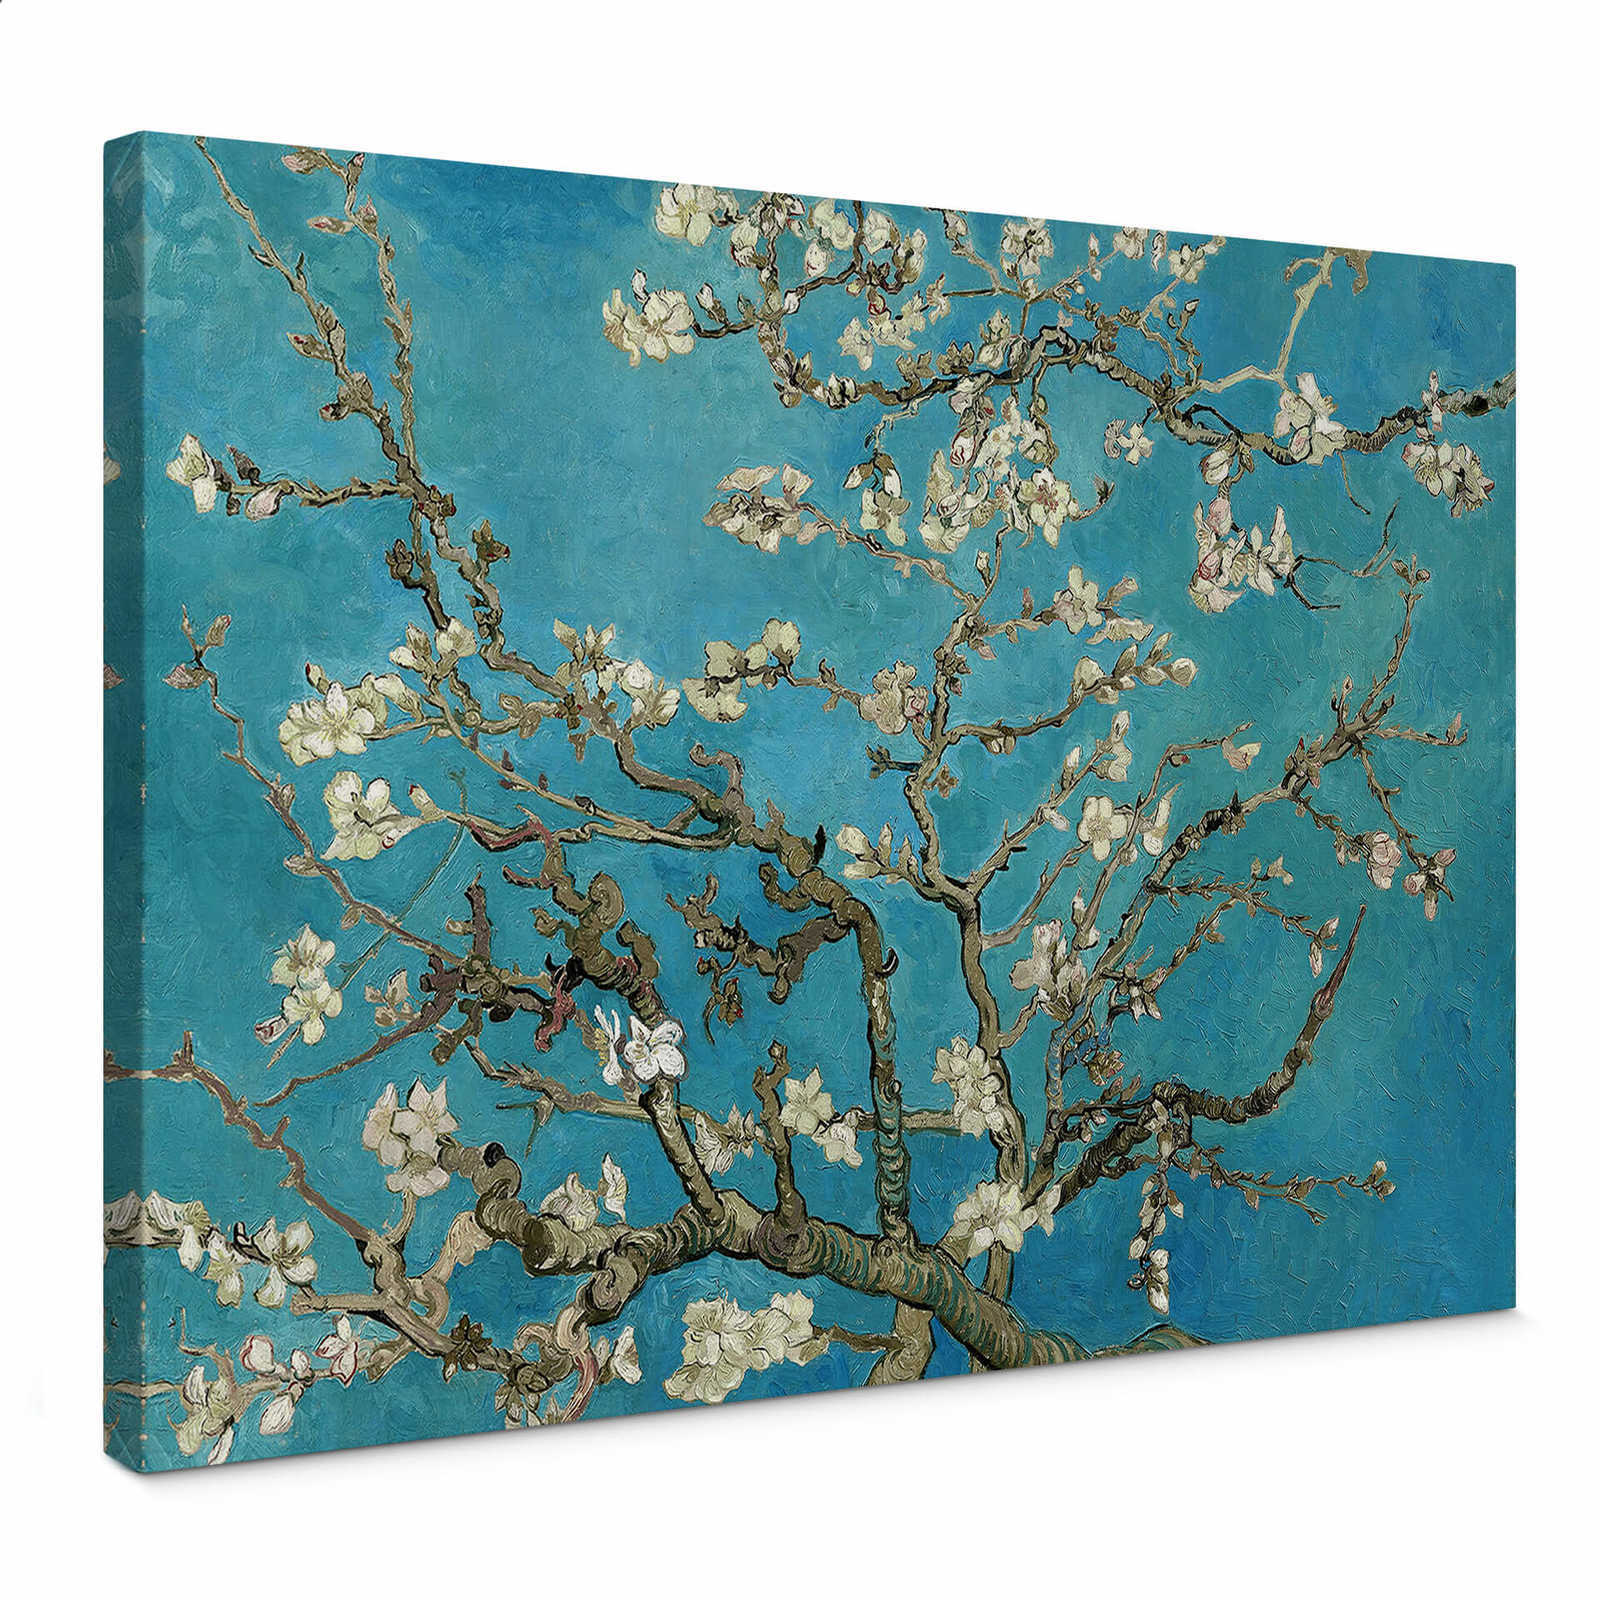         Leinwandbild "Mandelblüten" von Van Gogh – 0,70 m x 0,50 m
    